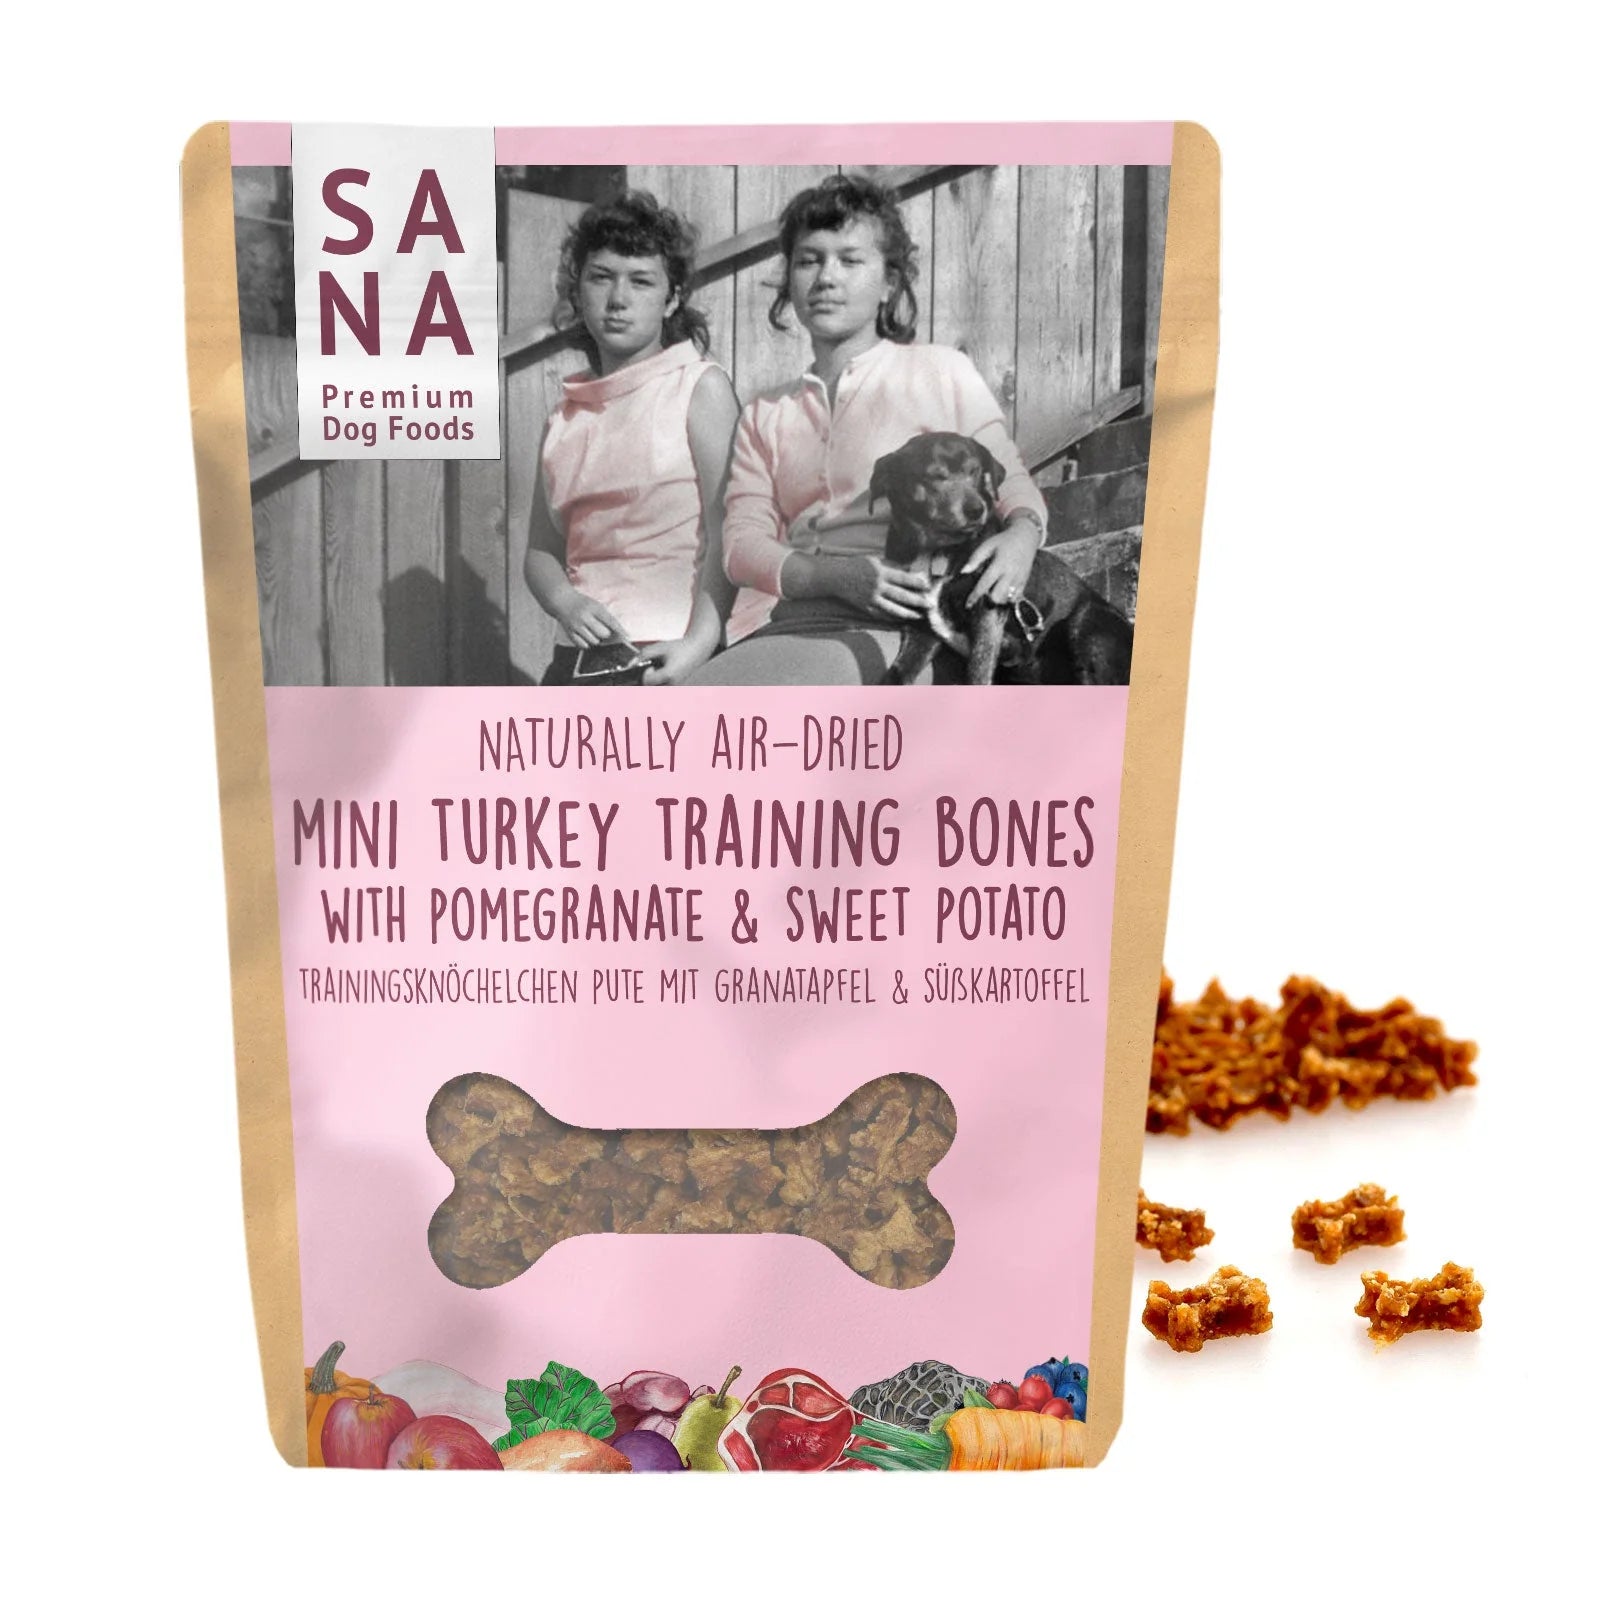 SANA premium dog foods mini turkey training bones with pomegranate and sweet potato. Dog training treats